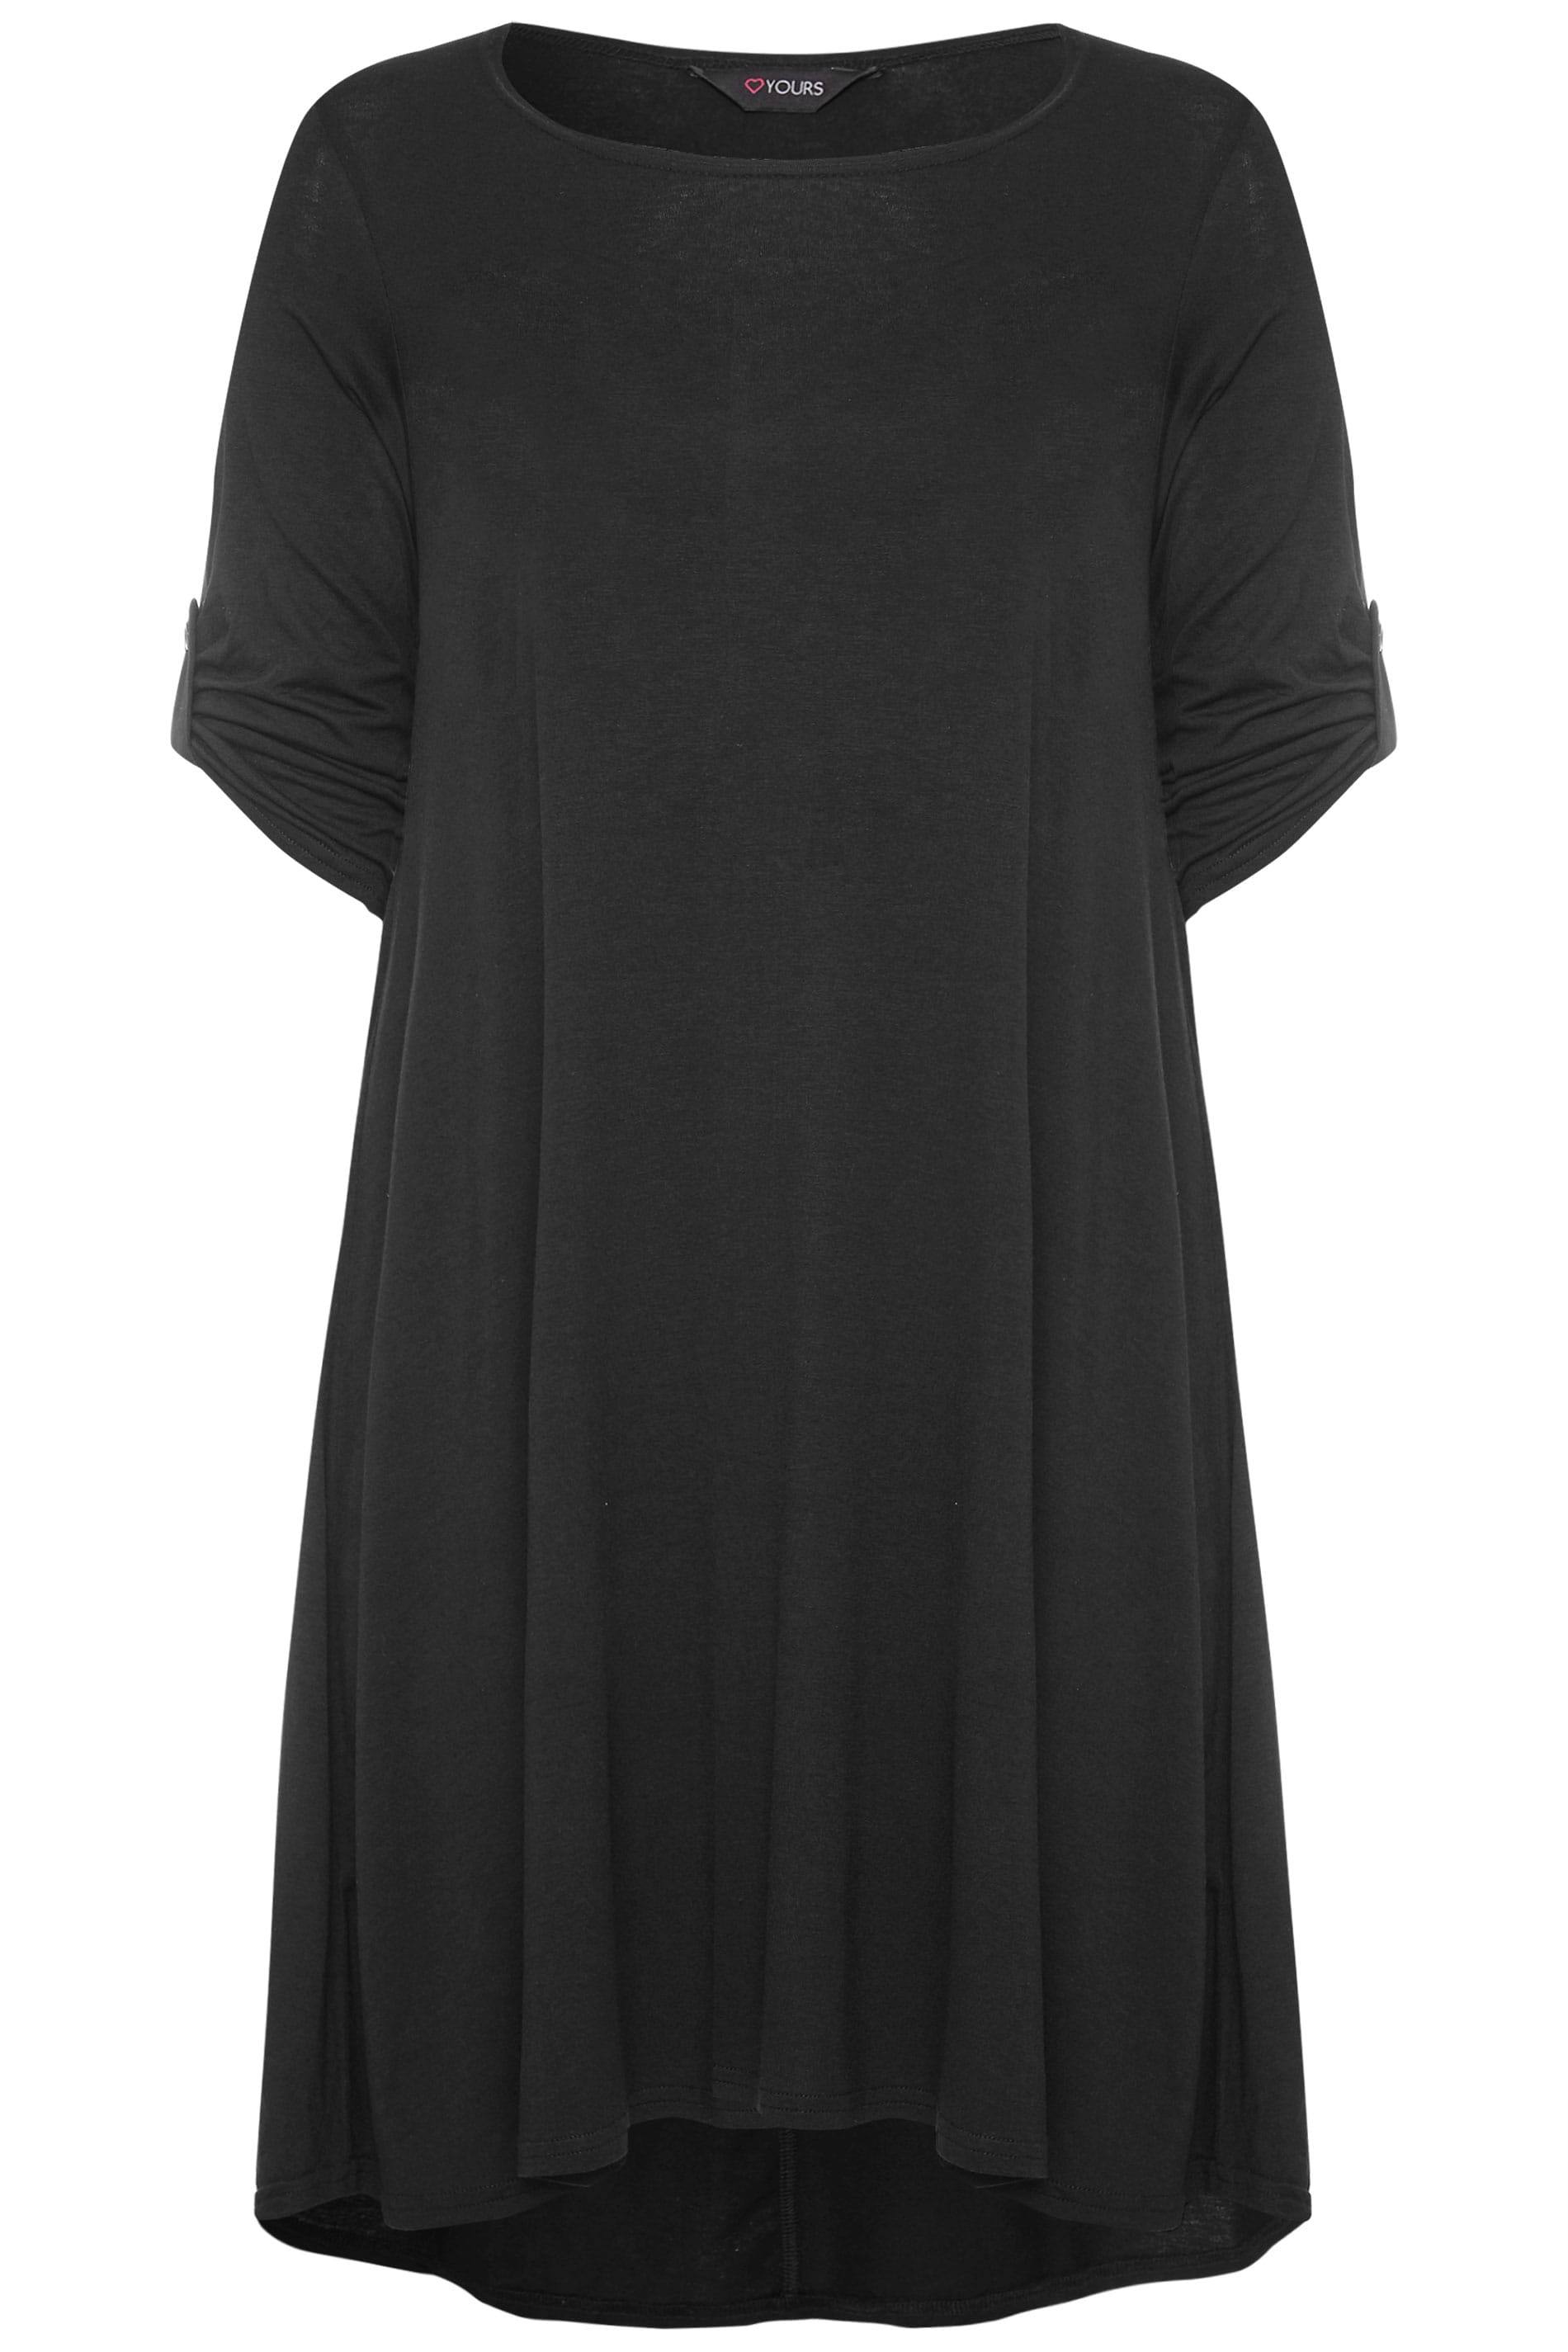 black t shirt swing dress